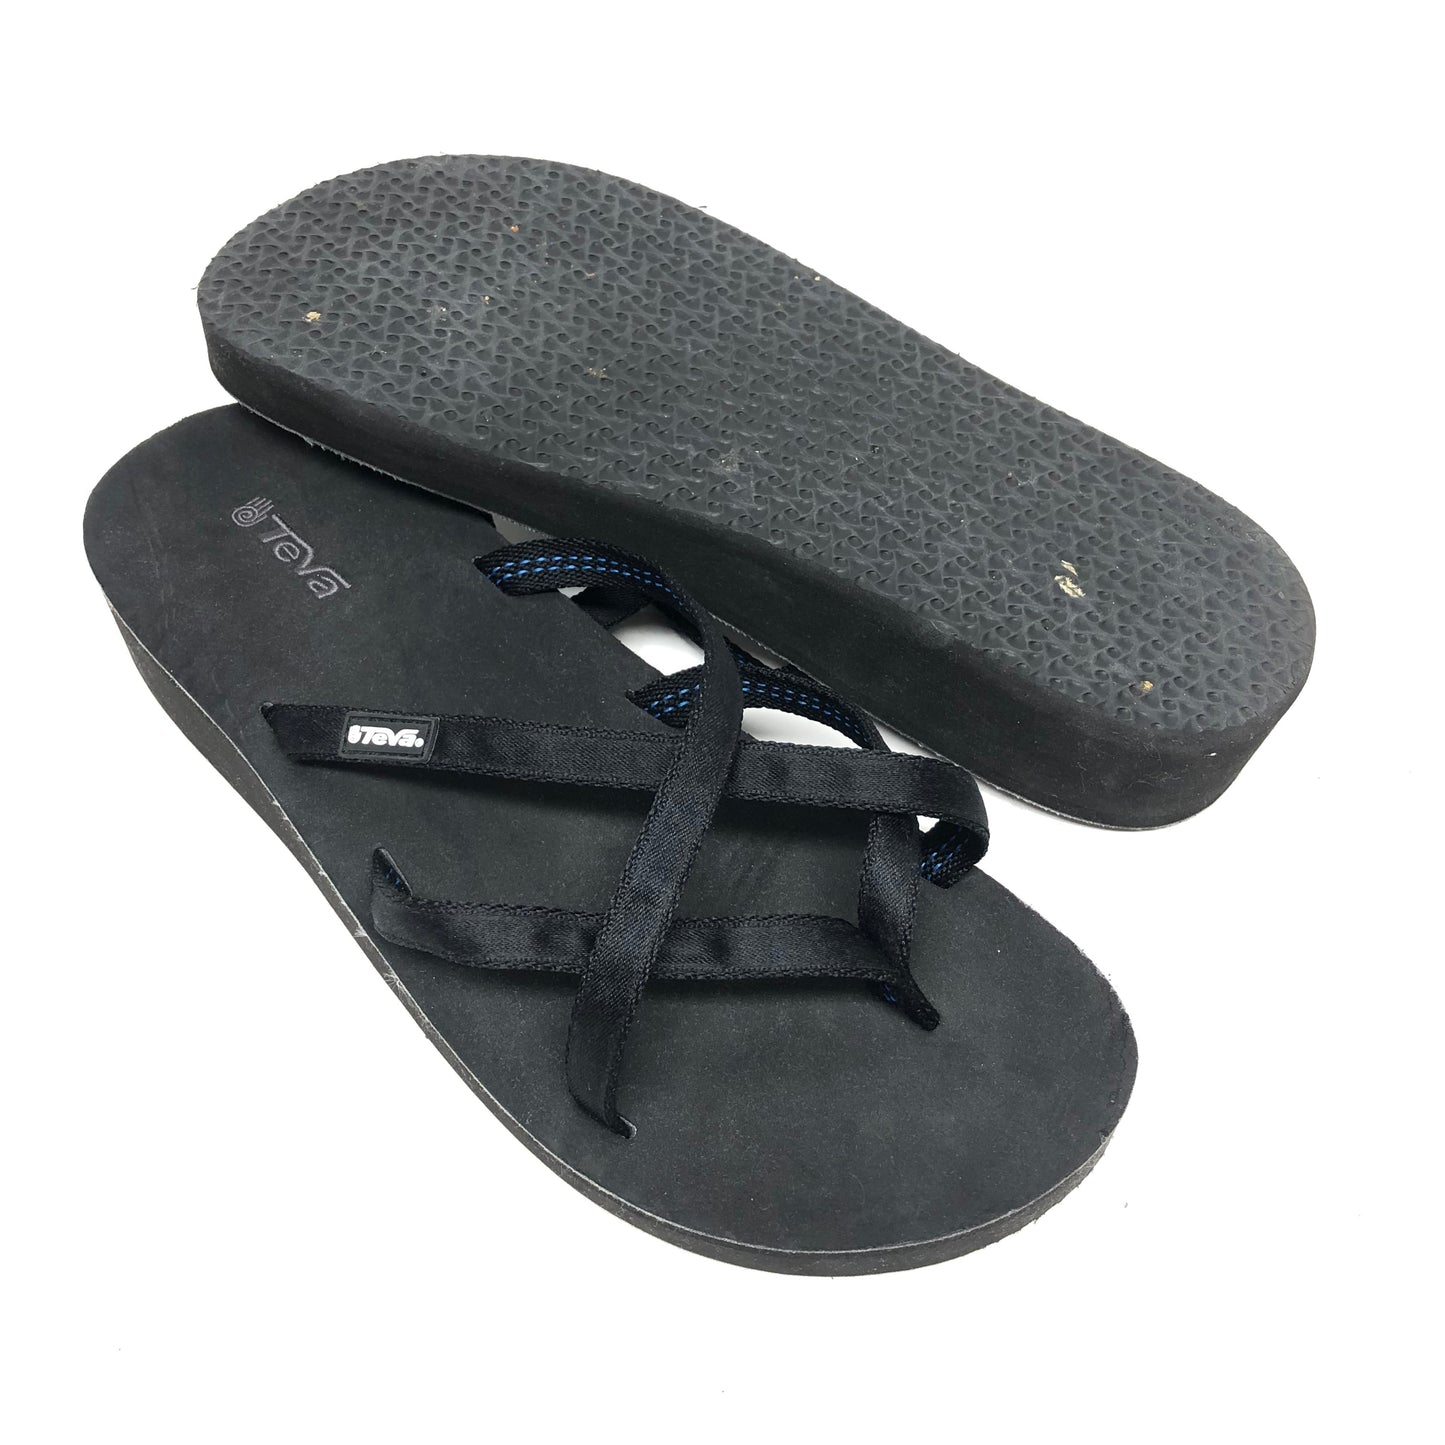 Sandals Flip Flops By Teva  Size: 11